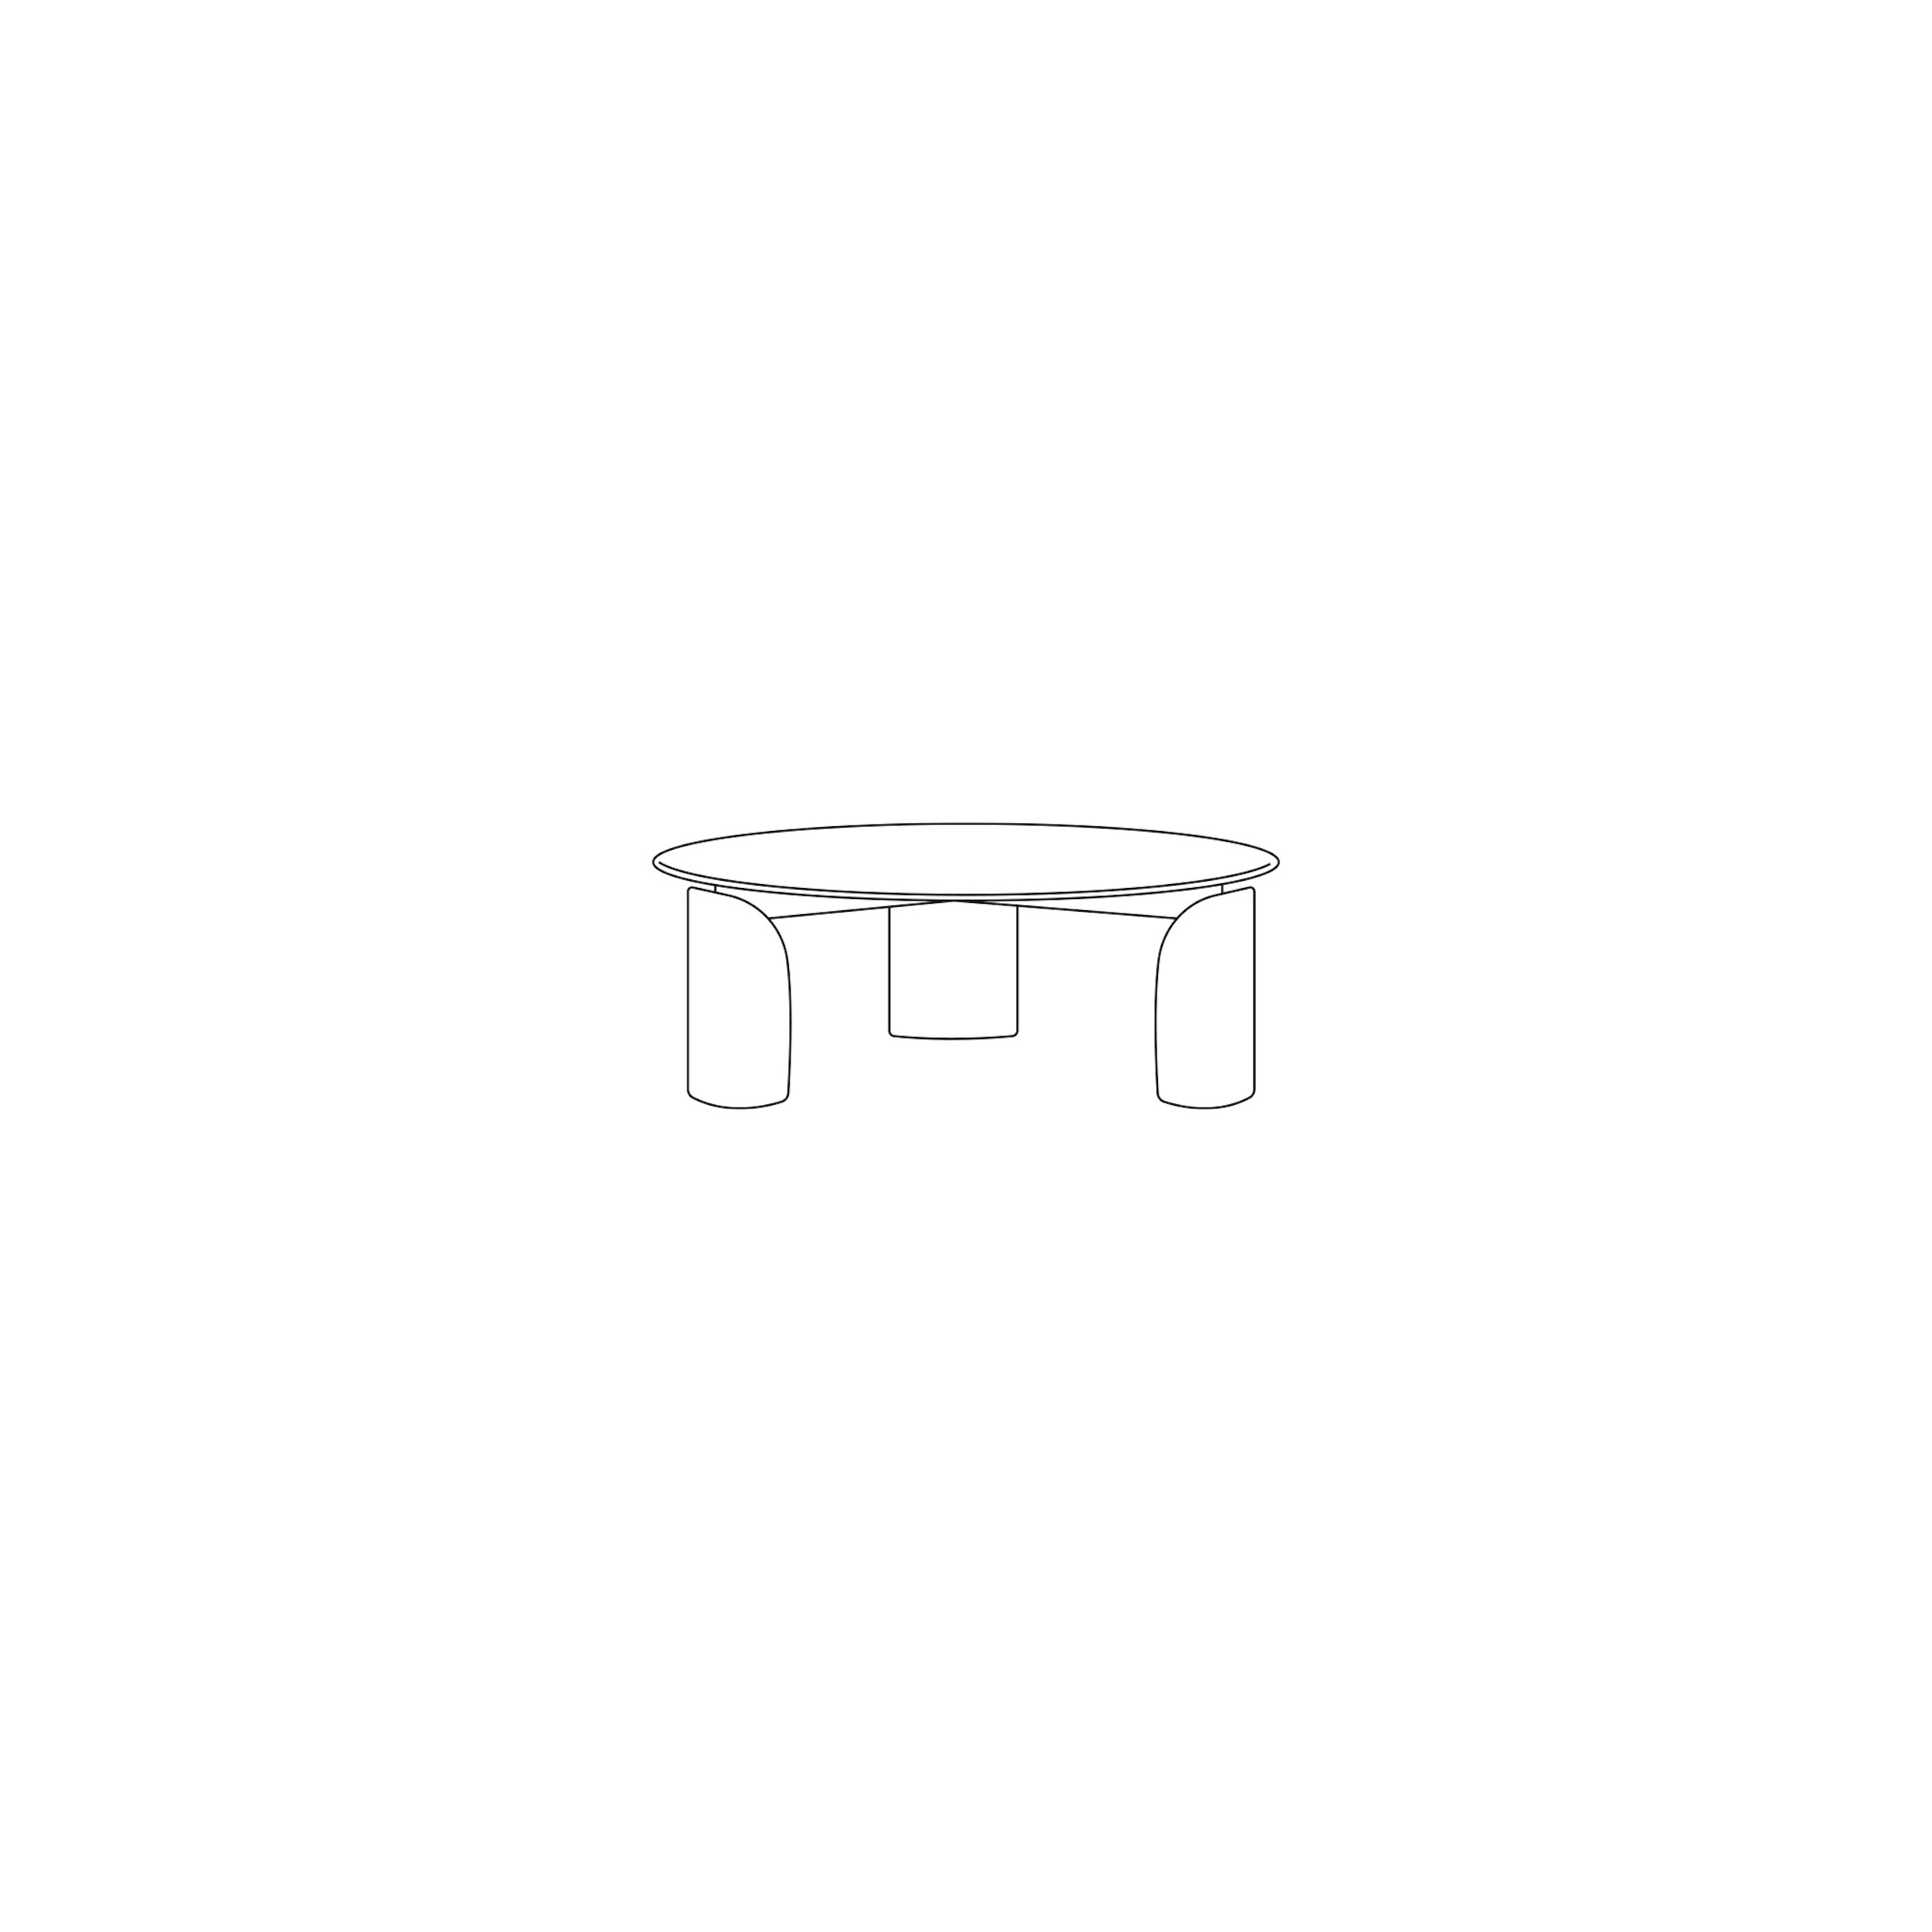 2021-07-salvatori_disegno-still-life_taula-coffee-table_circle